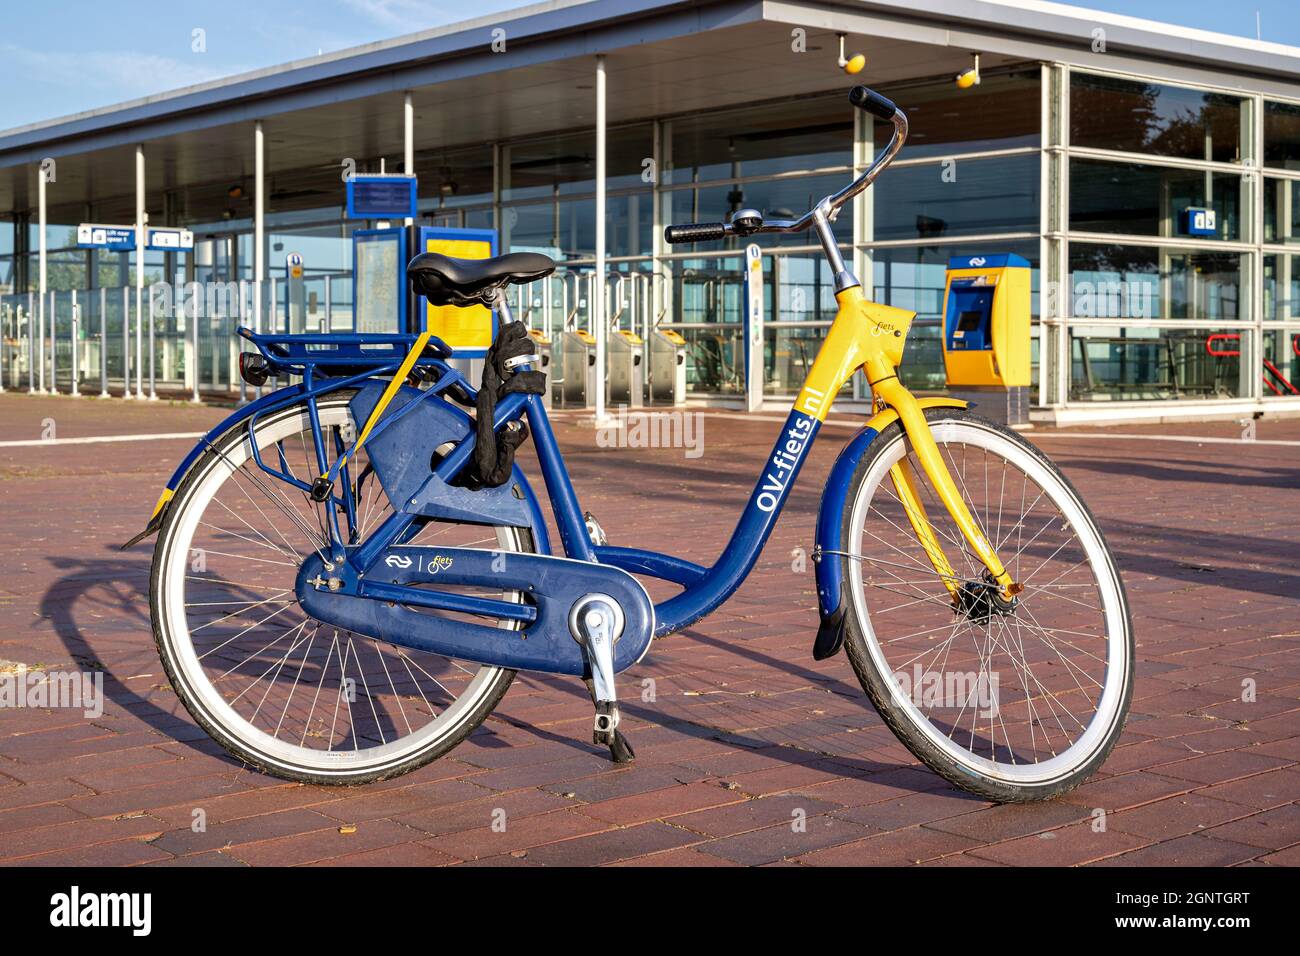 OV-fiets bike at Barendrecht station Stock Photo - Alamy